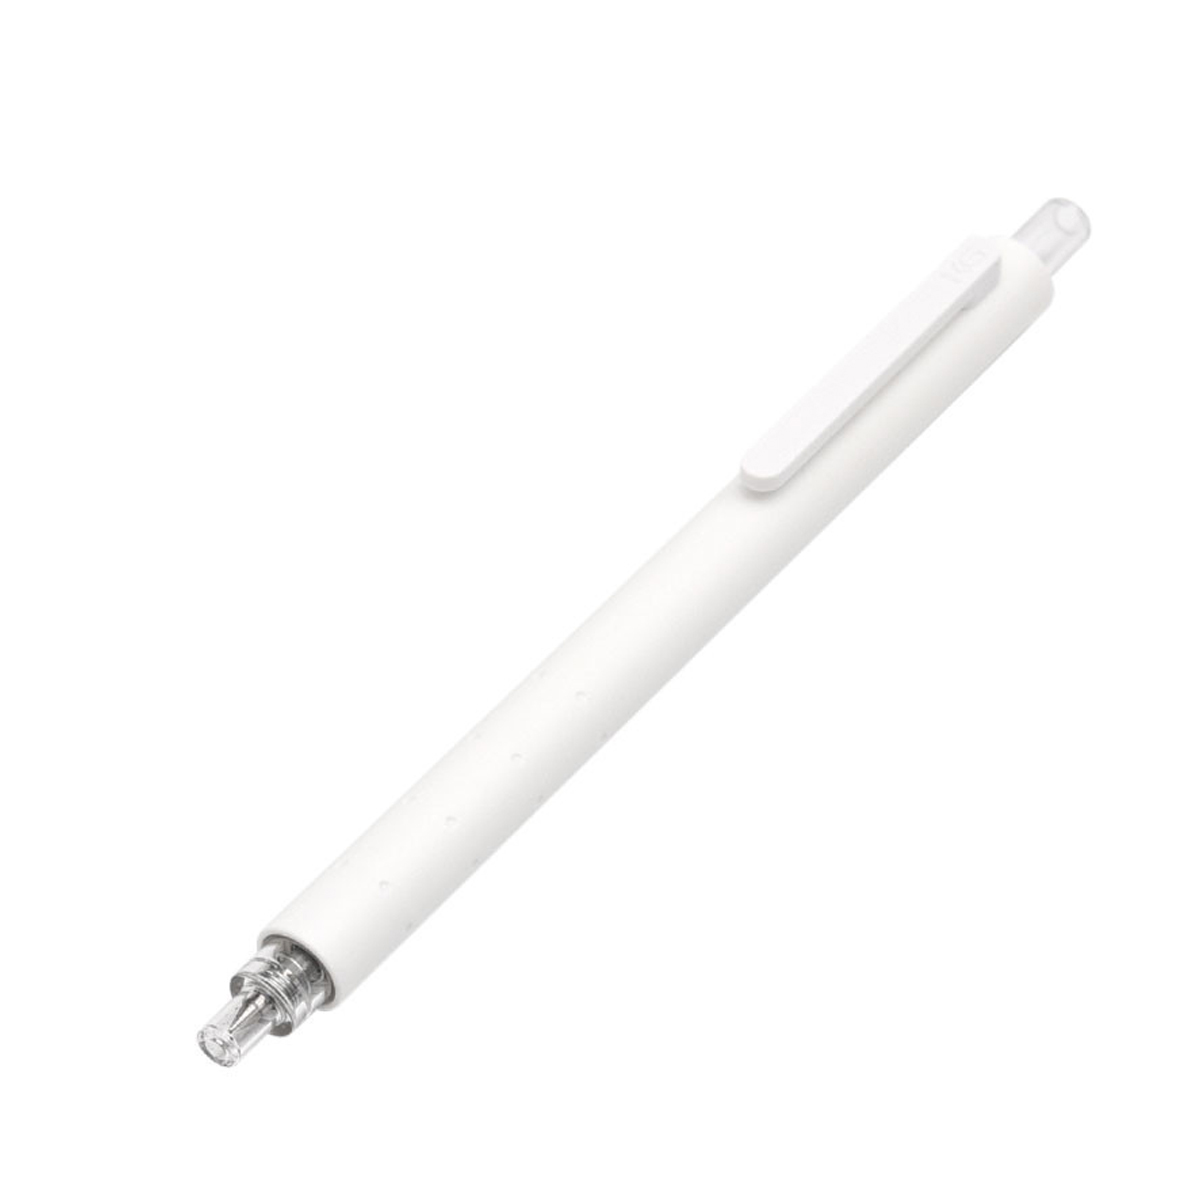 

KACO Rocket 1 Pc Gel Pen 0.5mm Writing Signing Pen Office School Supplies from Xiaomi Youpin